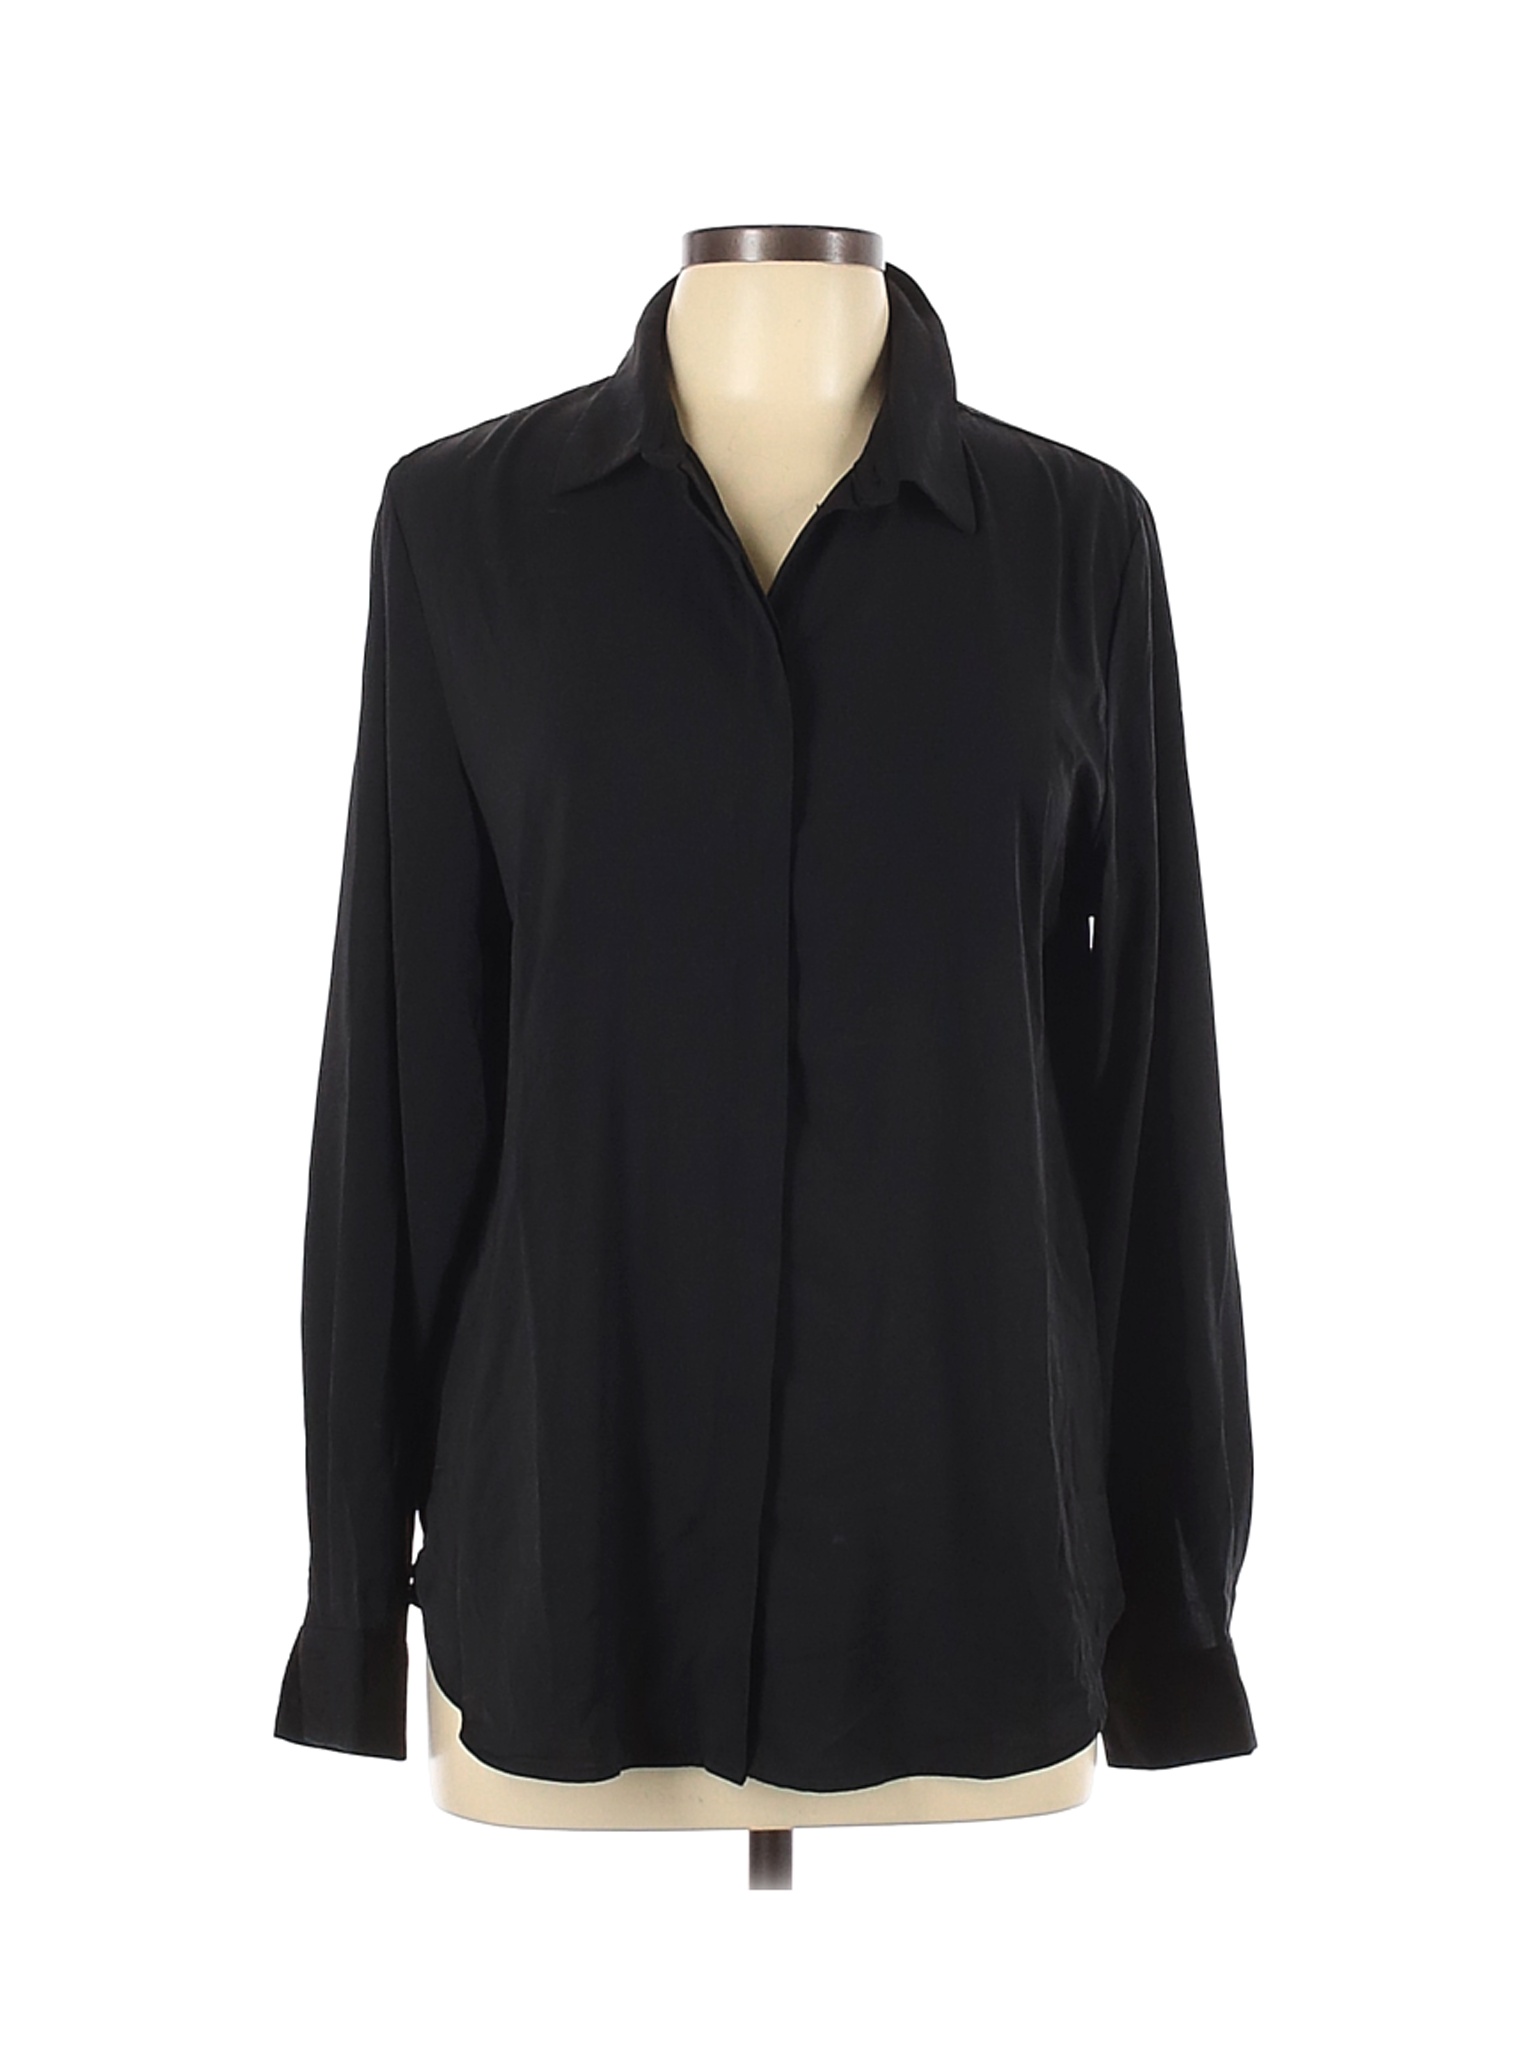 H&M Women Black Long Sleeve Blouse 10 | eBay